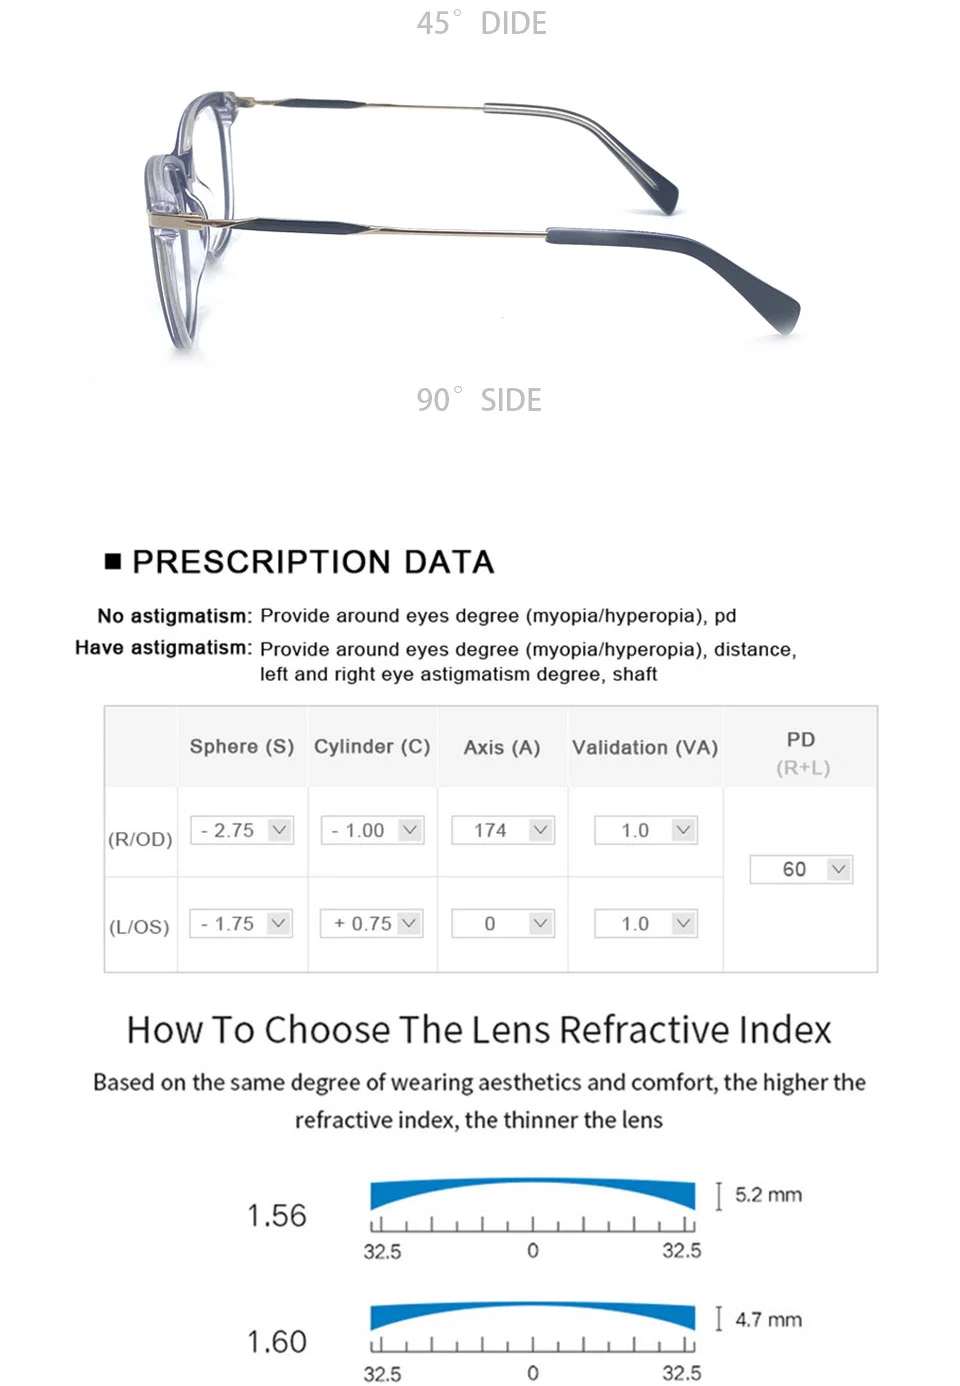 High Quality Acetate Optical Frame Eyeglasses for Women